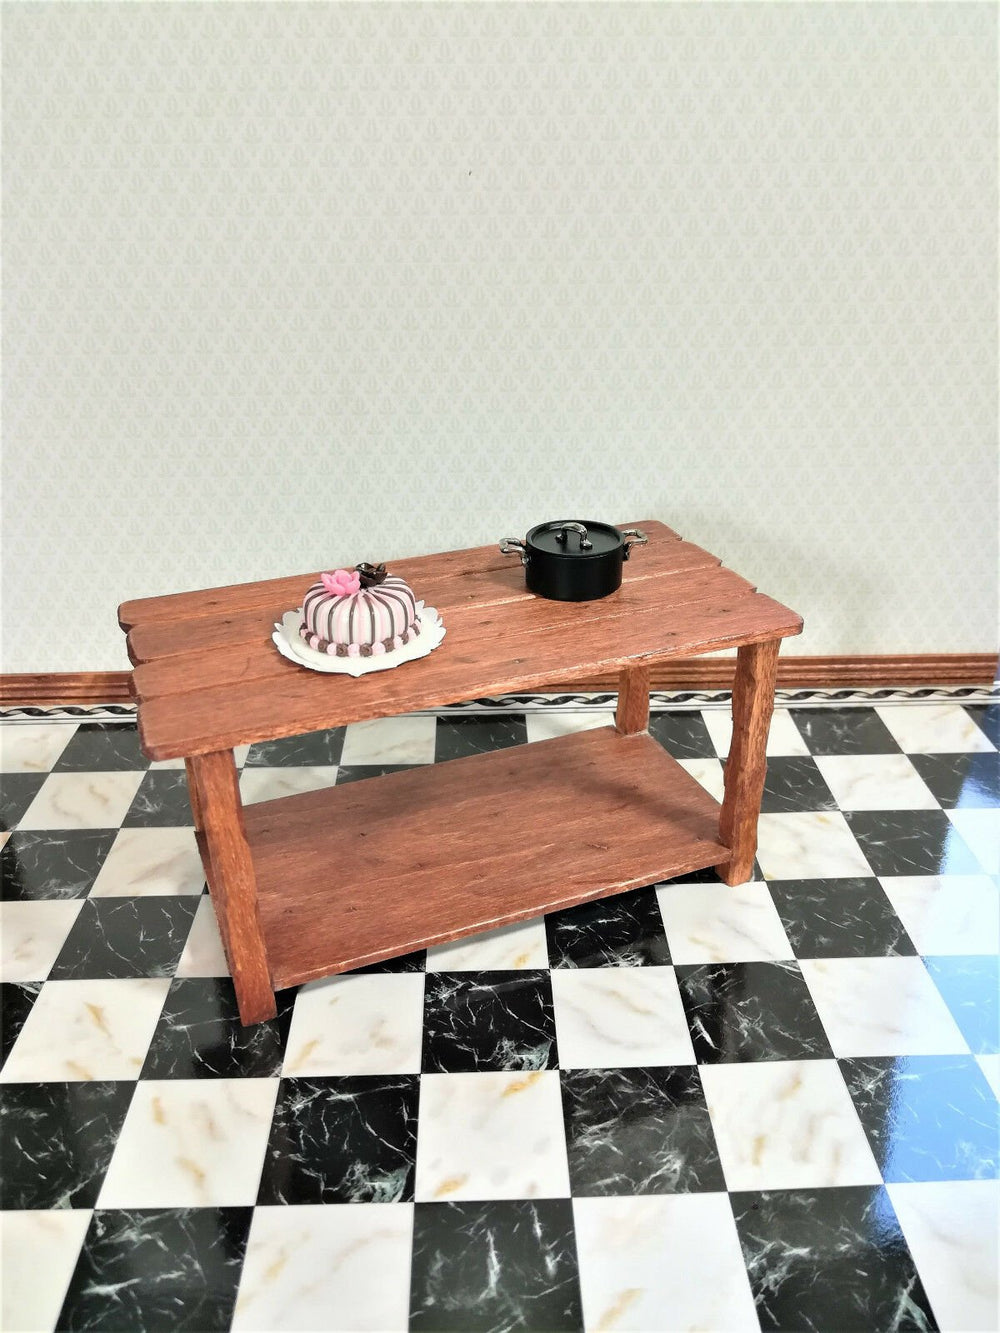 Dollhouse Miniature Marble Tile Black & White Square Checked Flooring 1:12 Scale - Miniature Crush